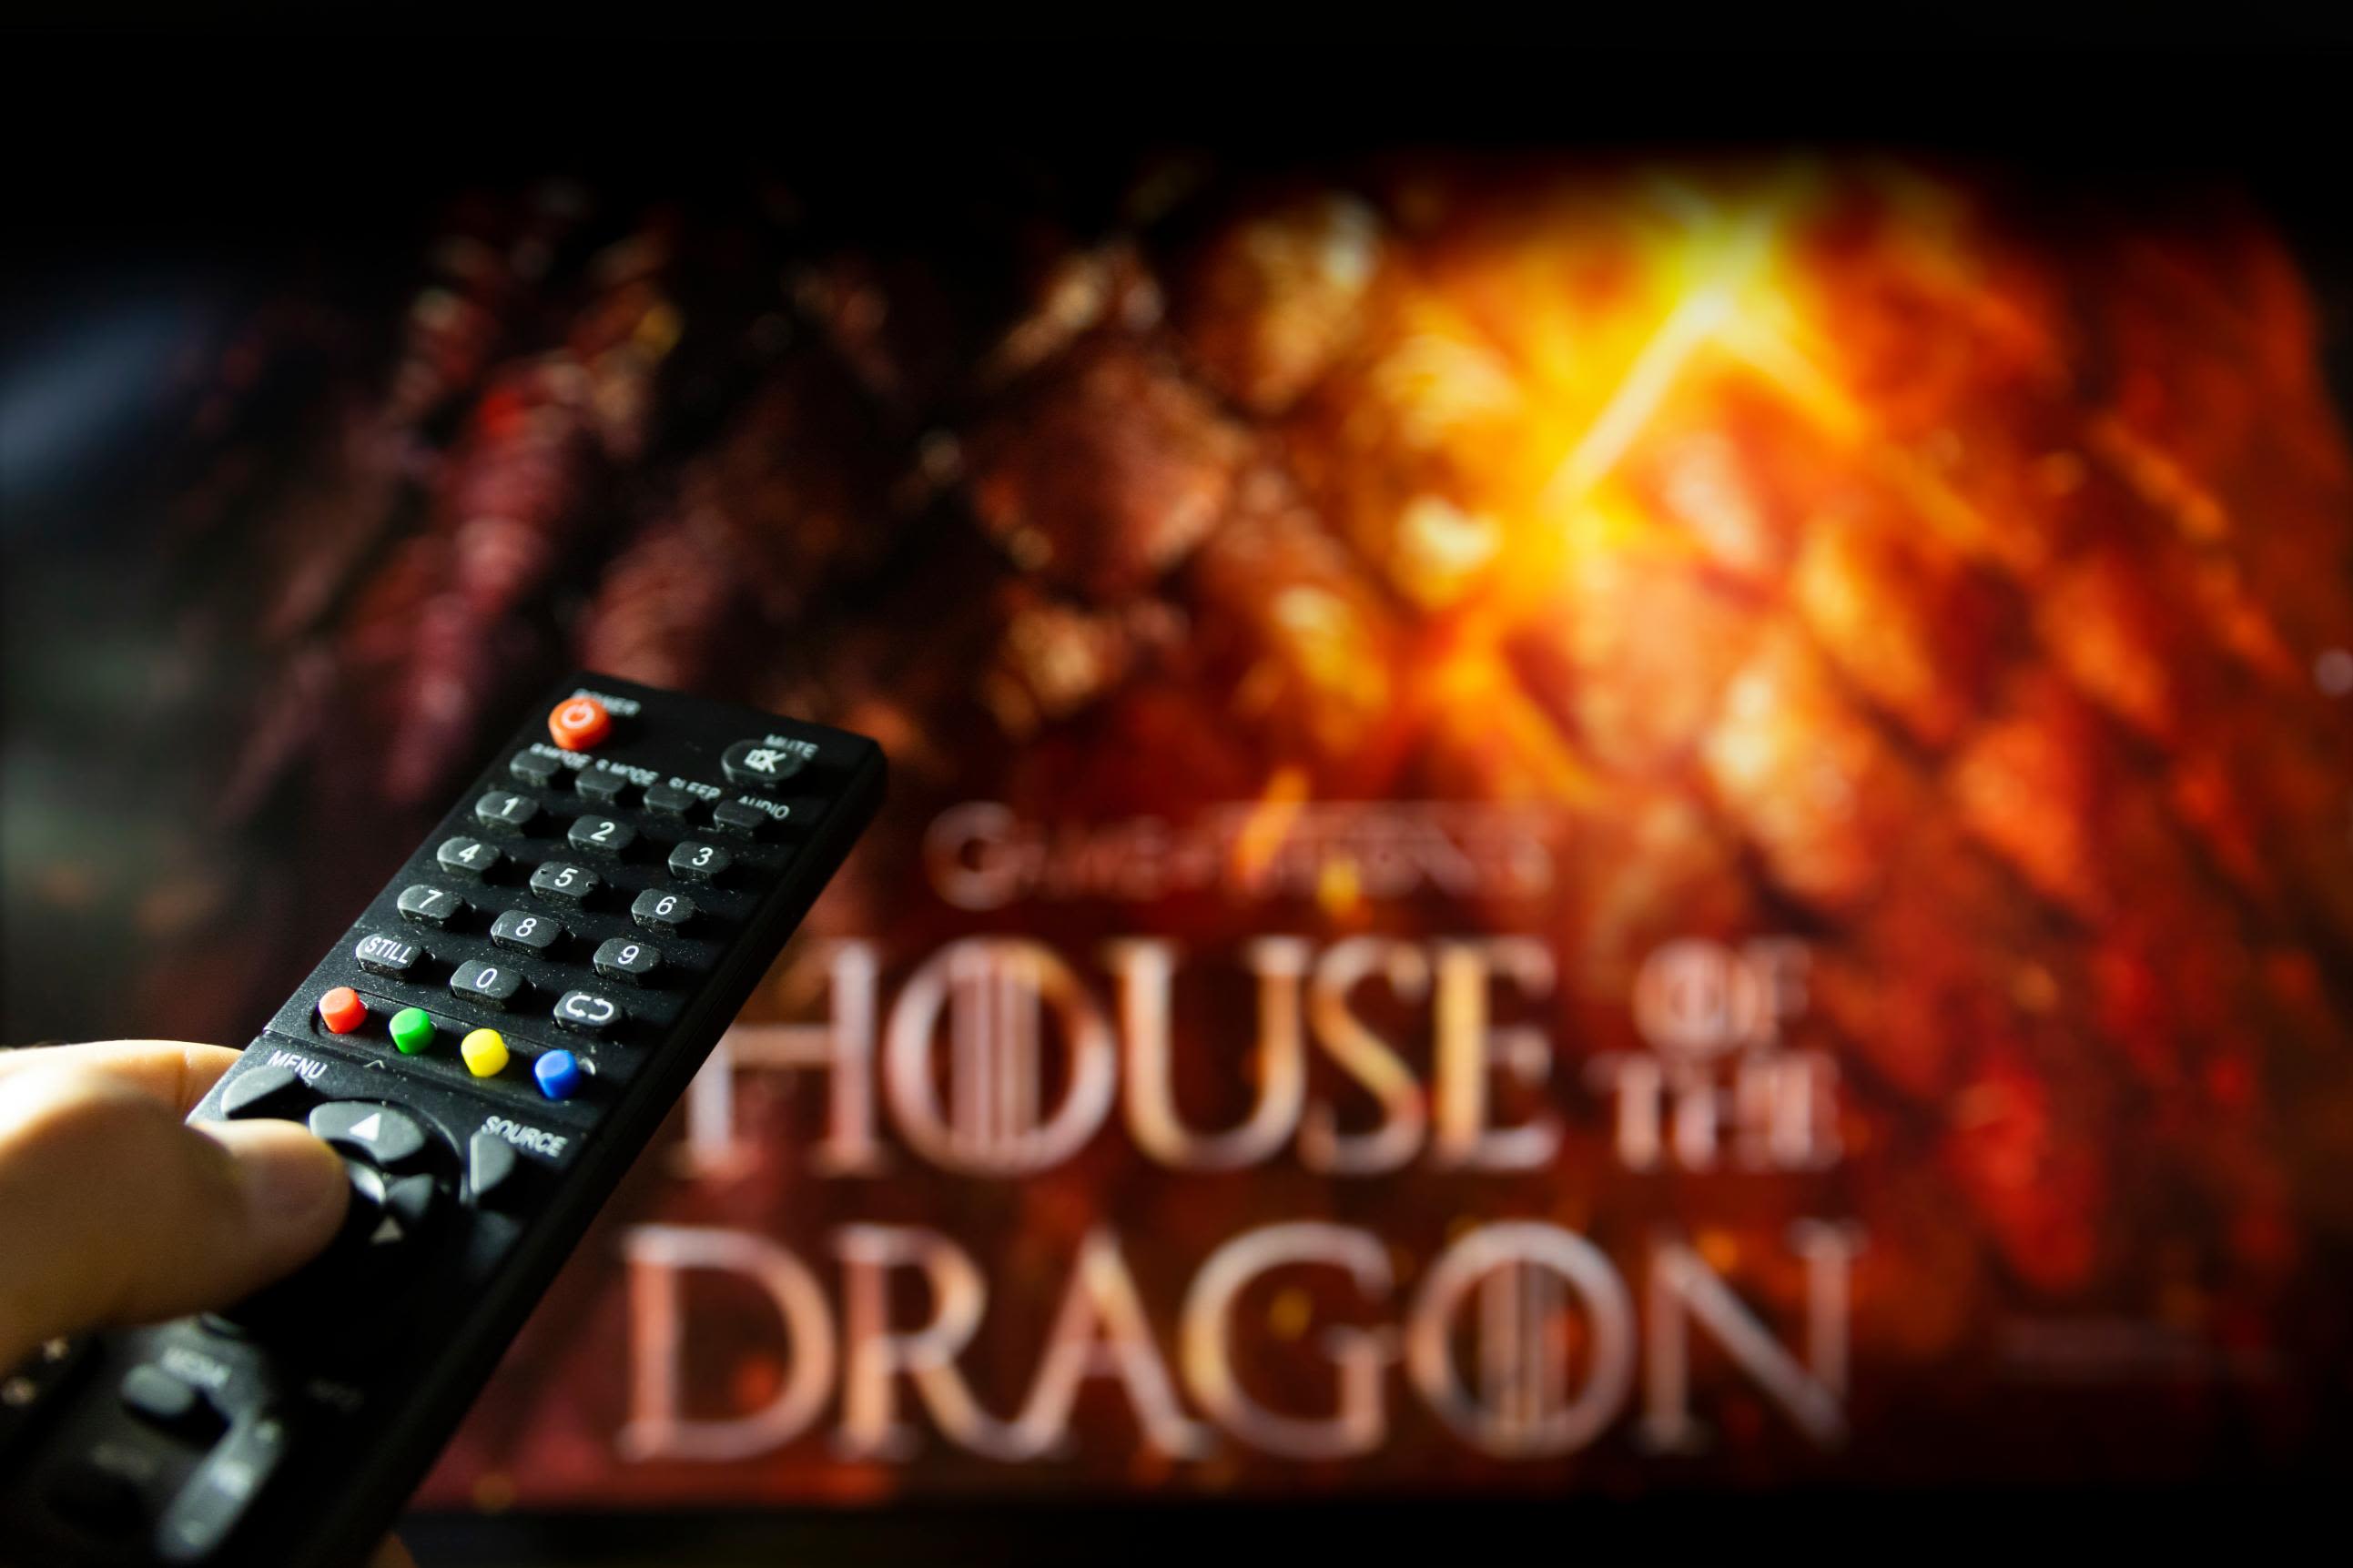 House of the Dragon renovada para 2ª temporada